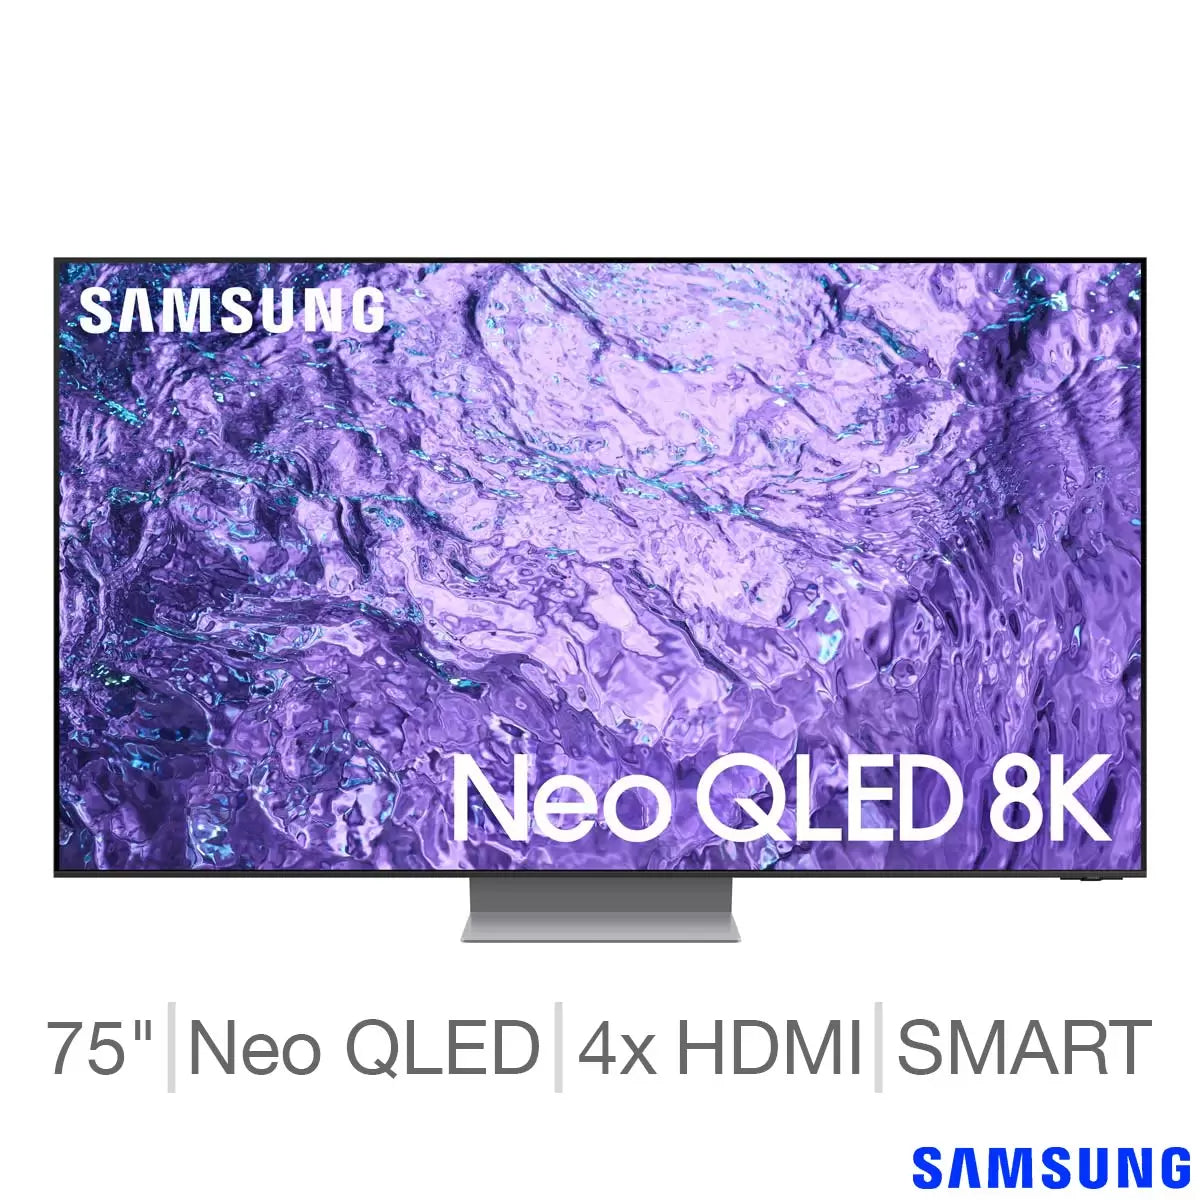 Samsung Neo QLED 8K Ultra HD Smart TV - 75 Inch